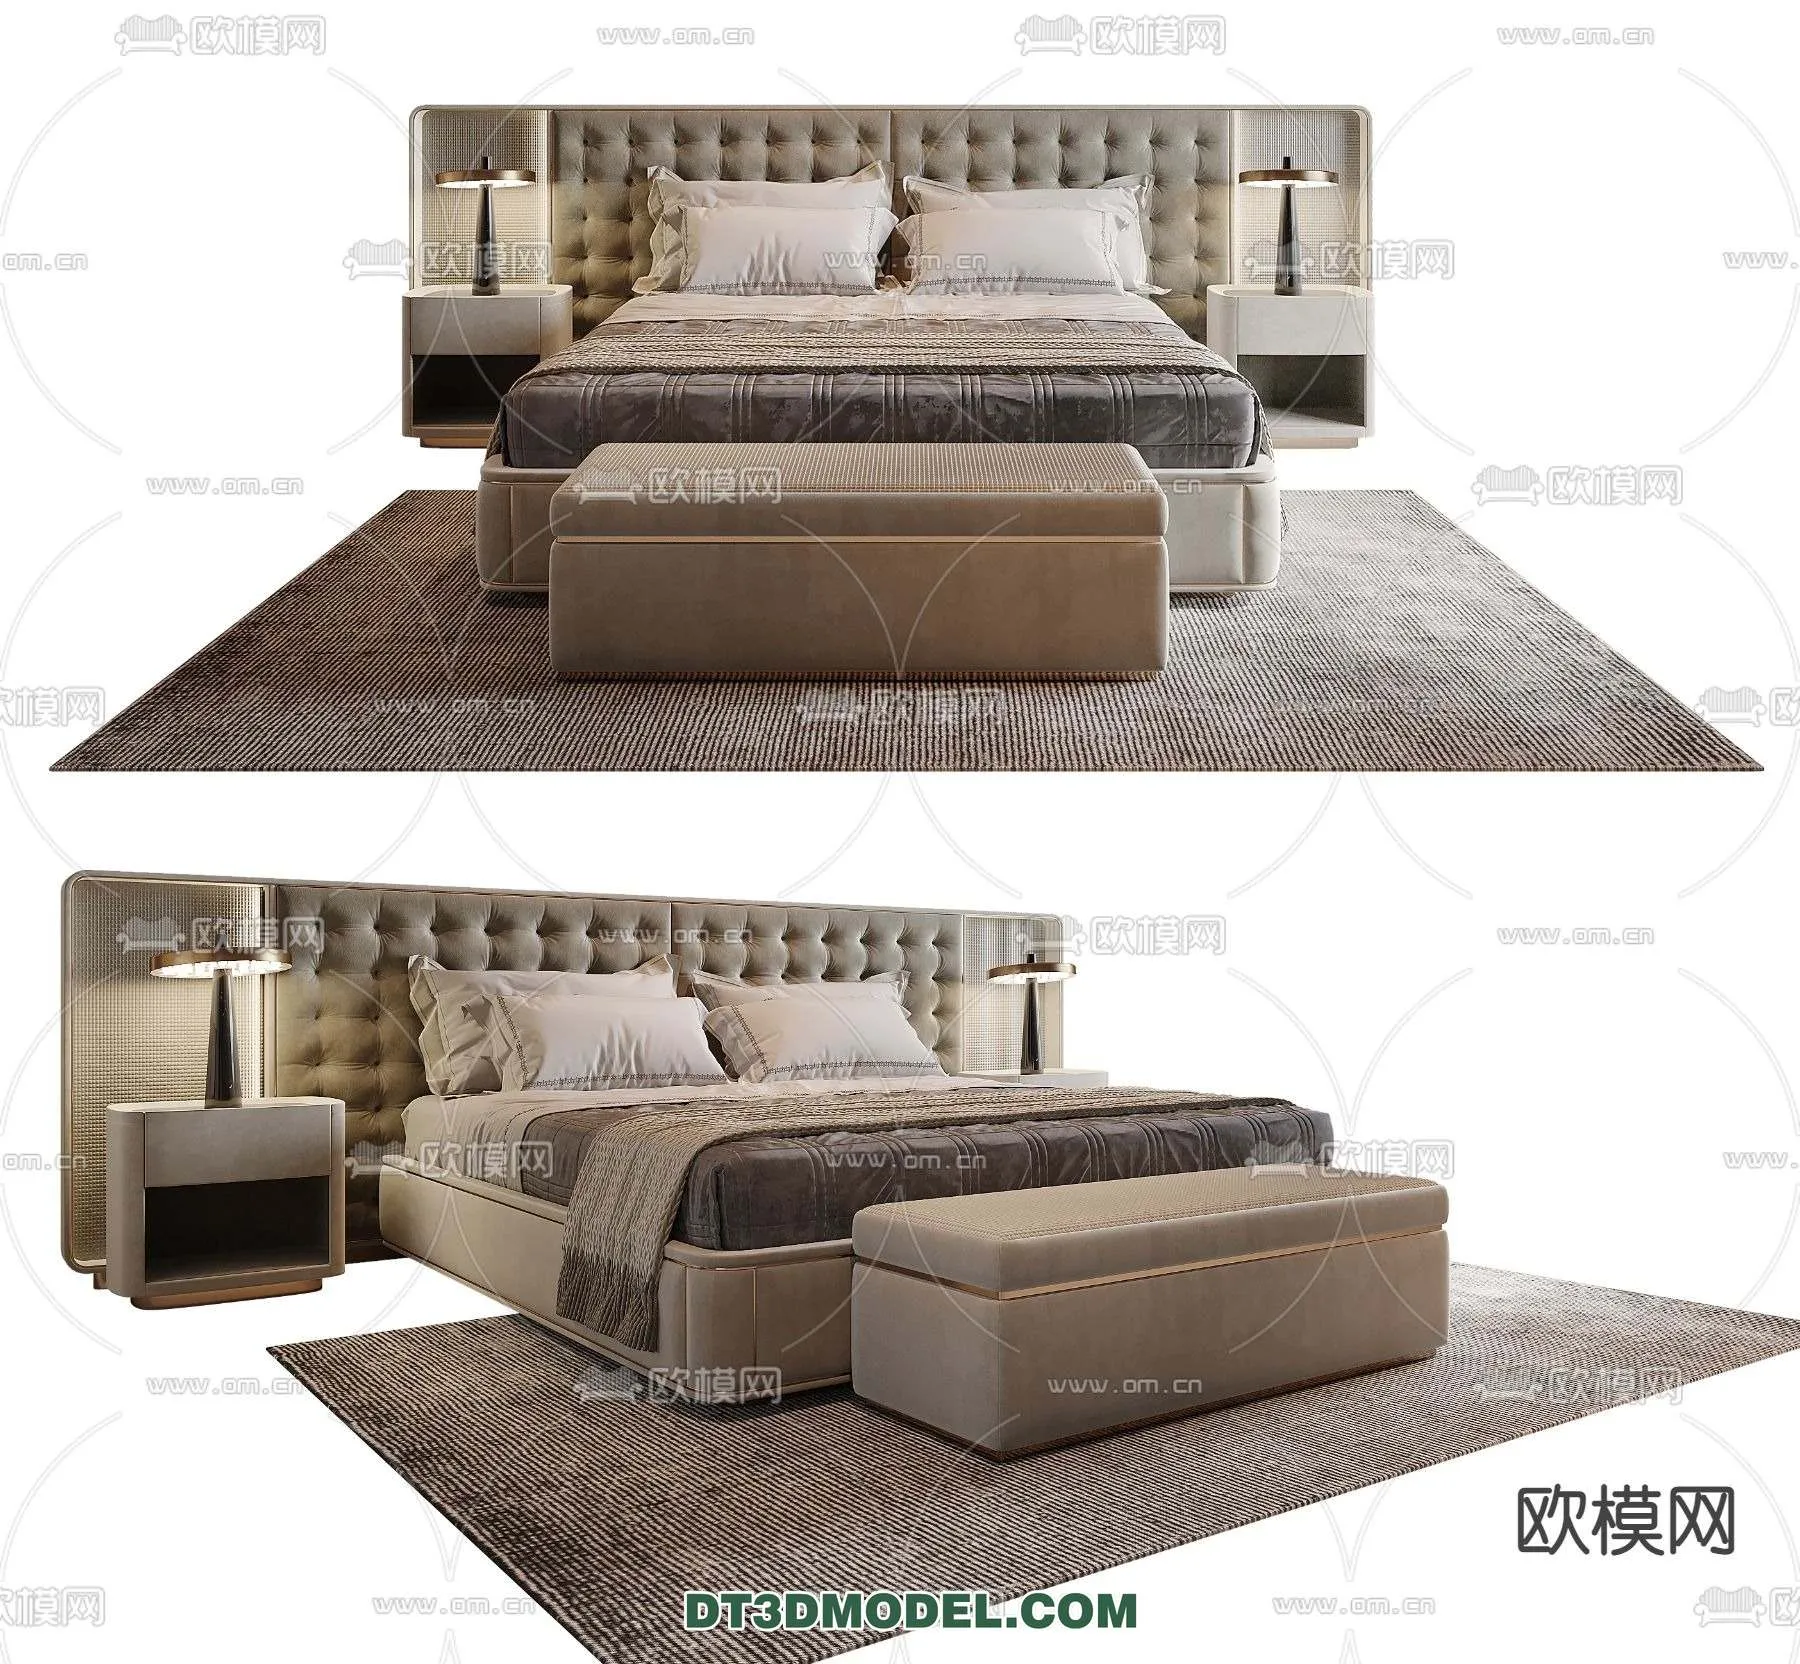 Double Bed 3D Models – 0041